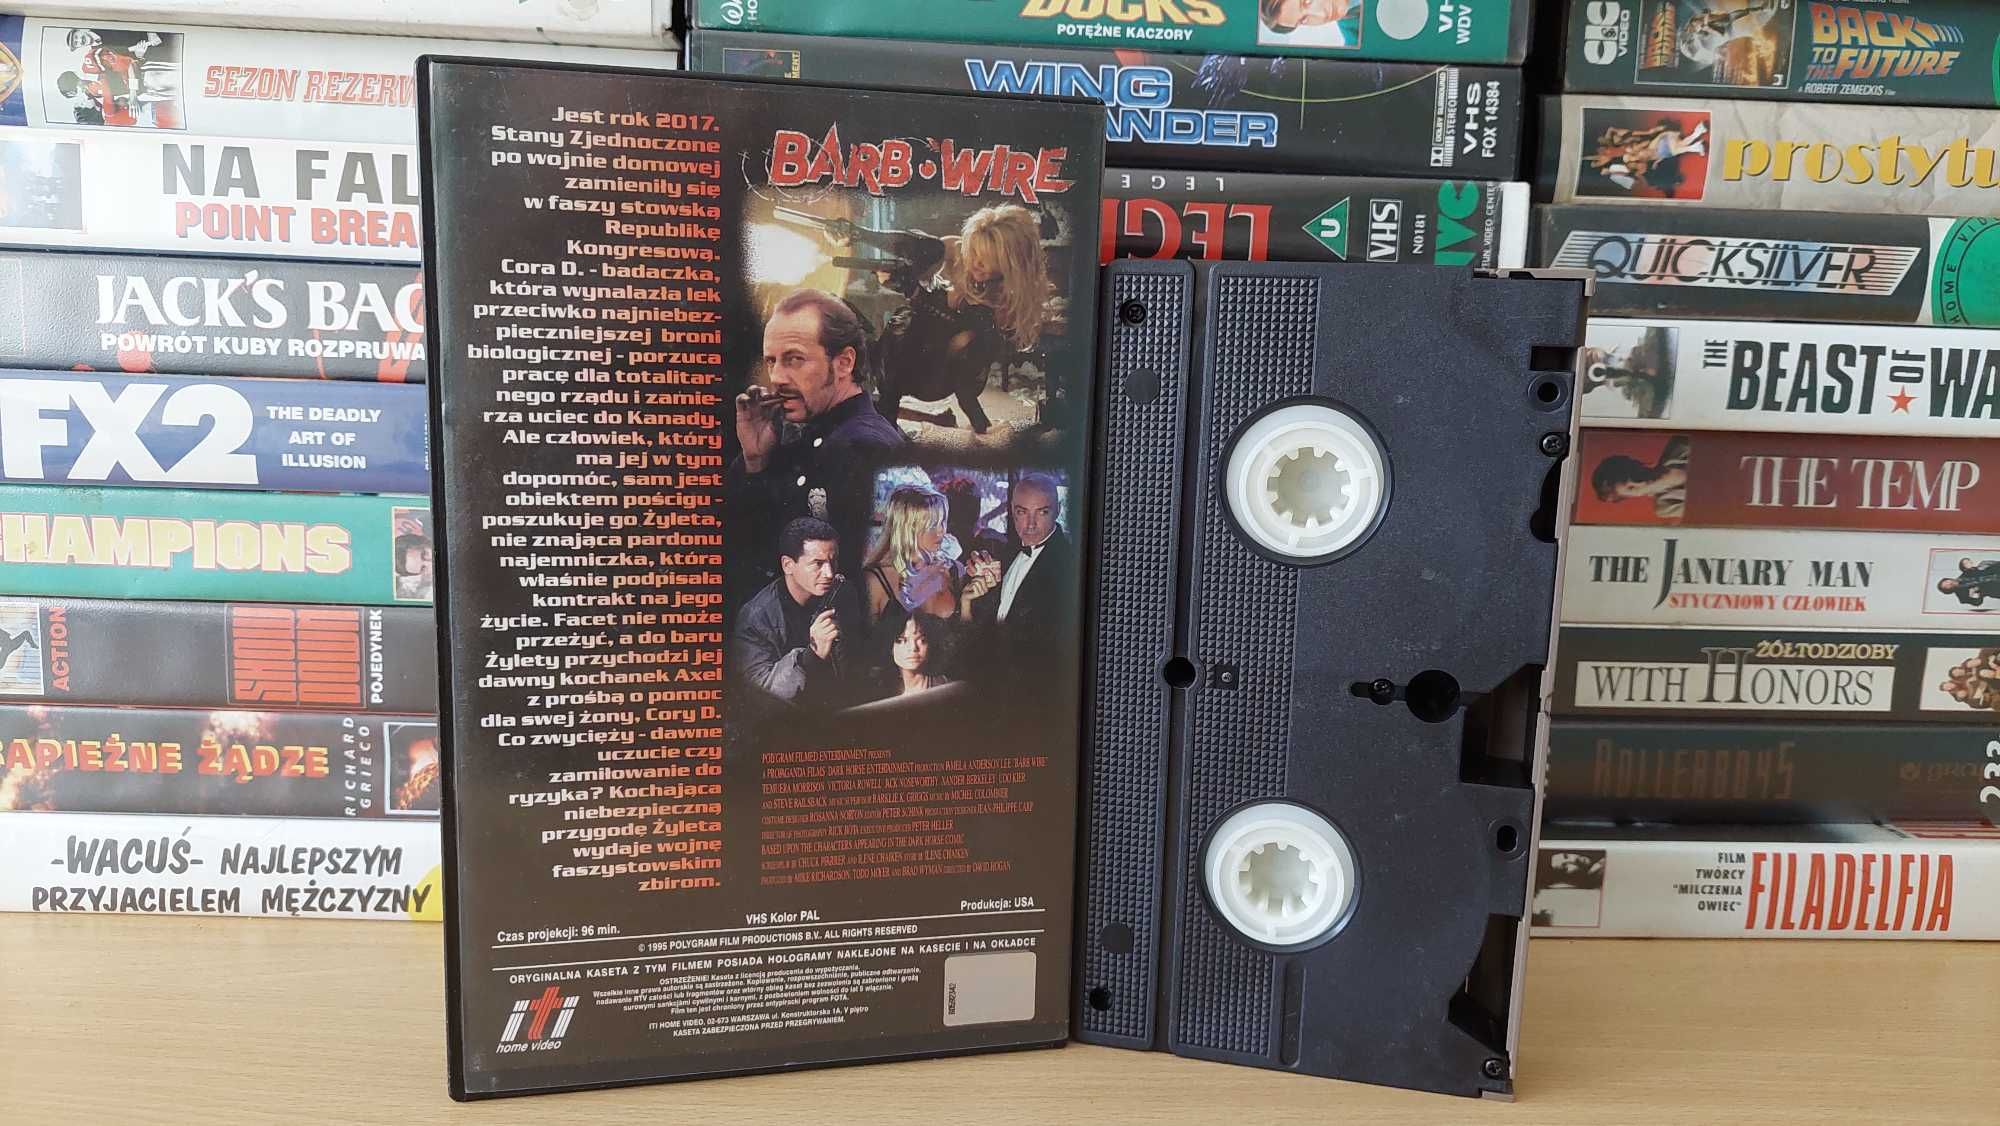 Żyleta - (Barb Wire) - VHS